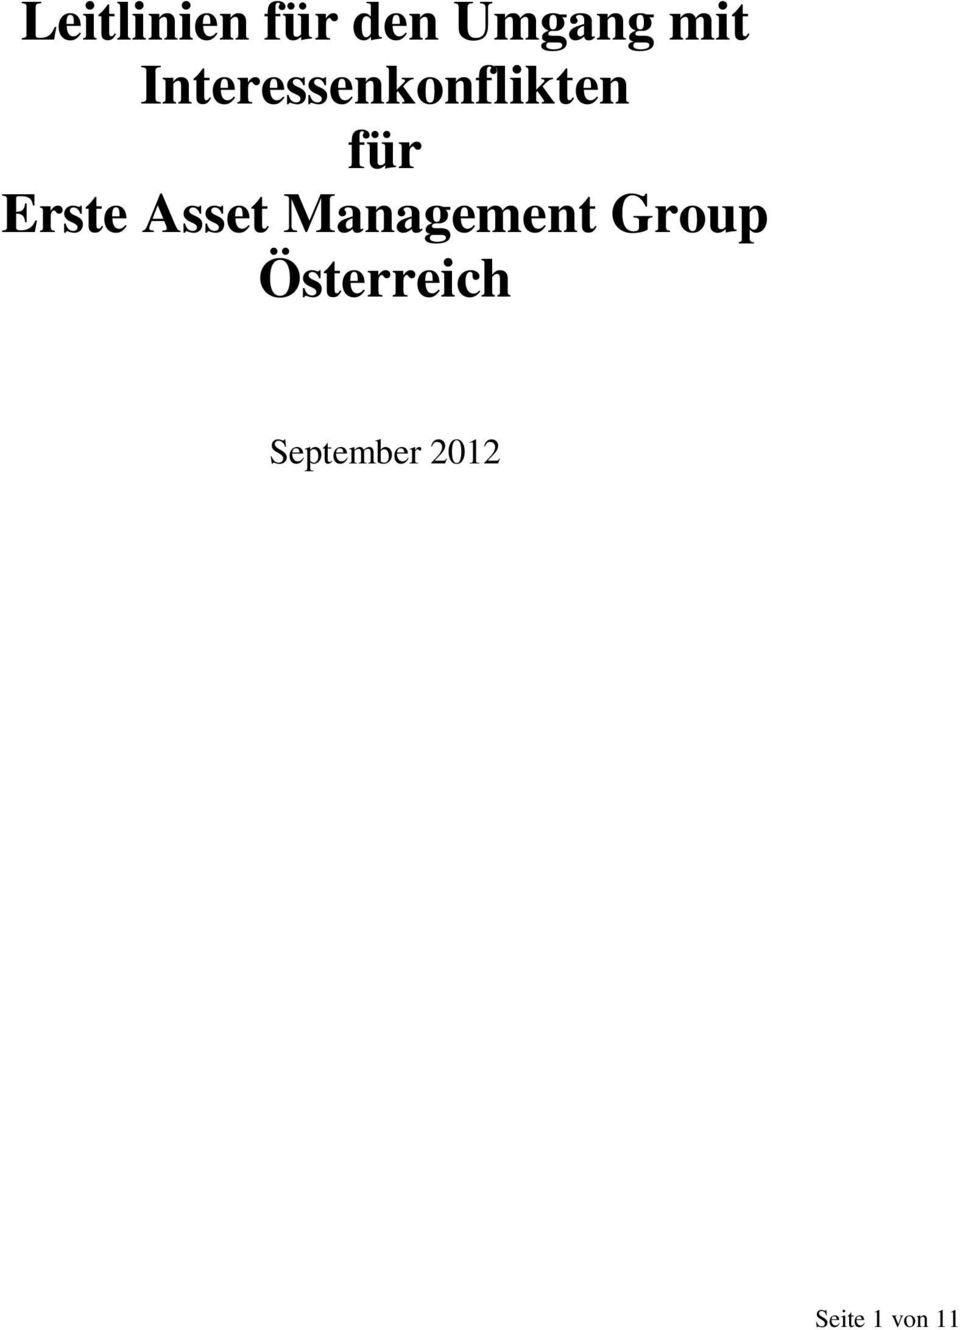 Asset Management Group